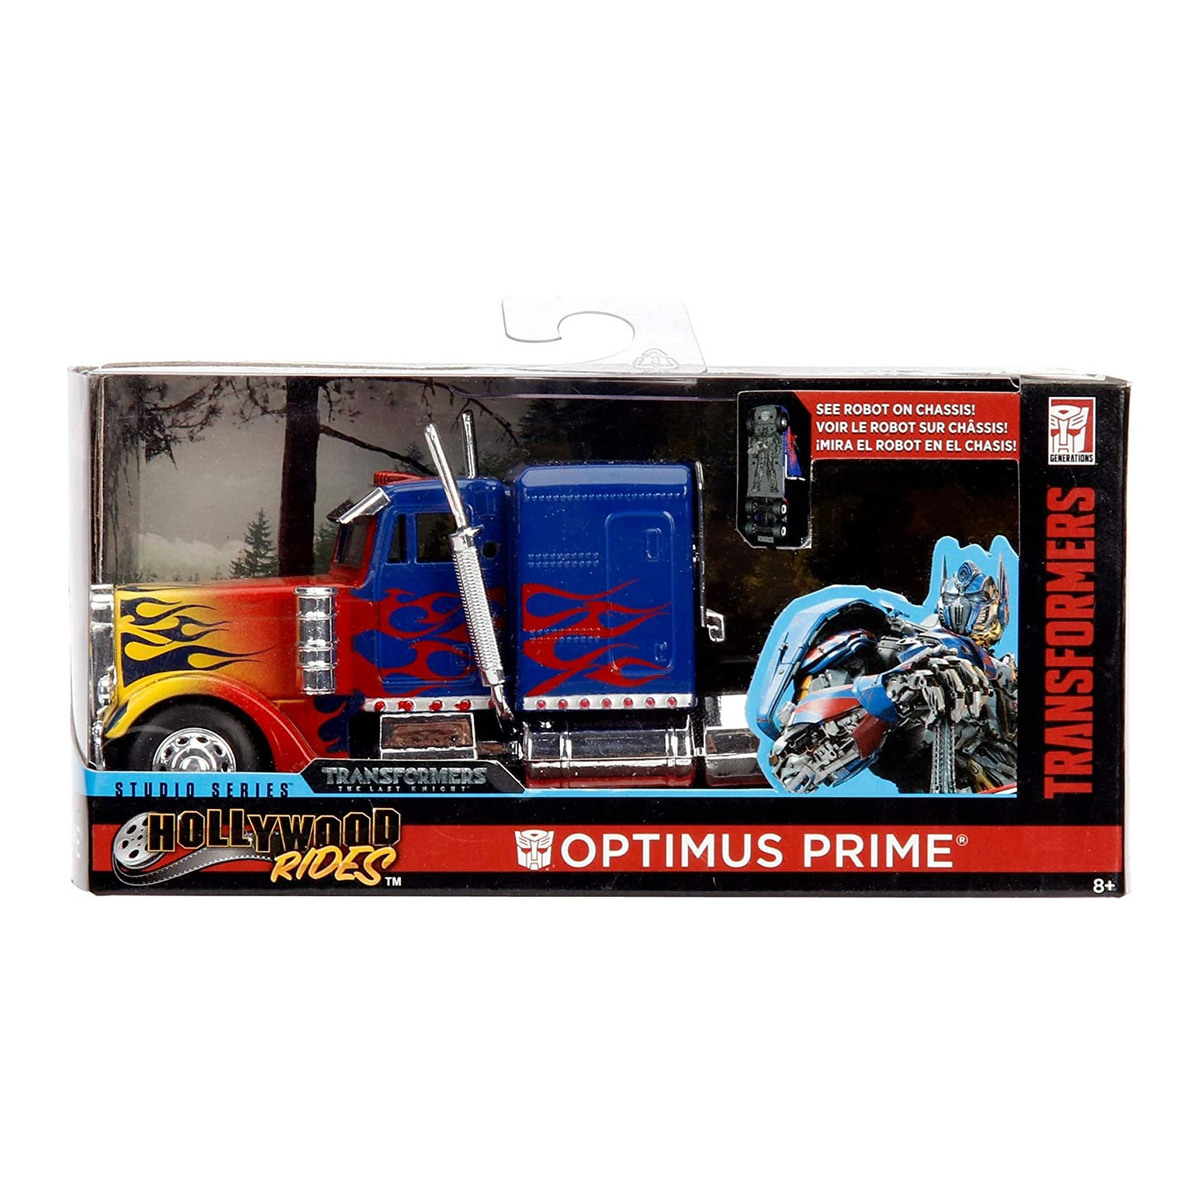 Jada Transformers T1 Optimus Prime Die-Cast Model, 1:32 Scale